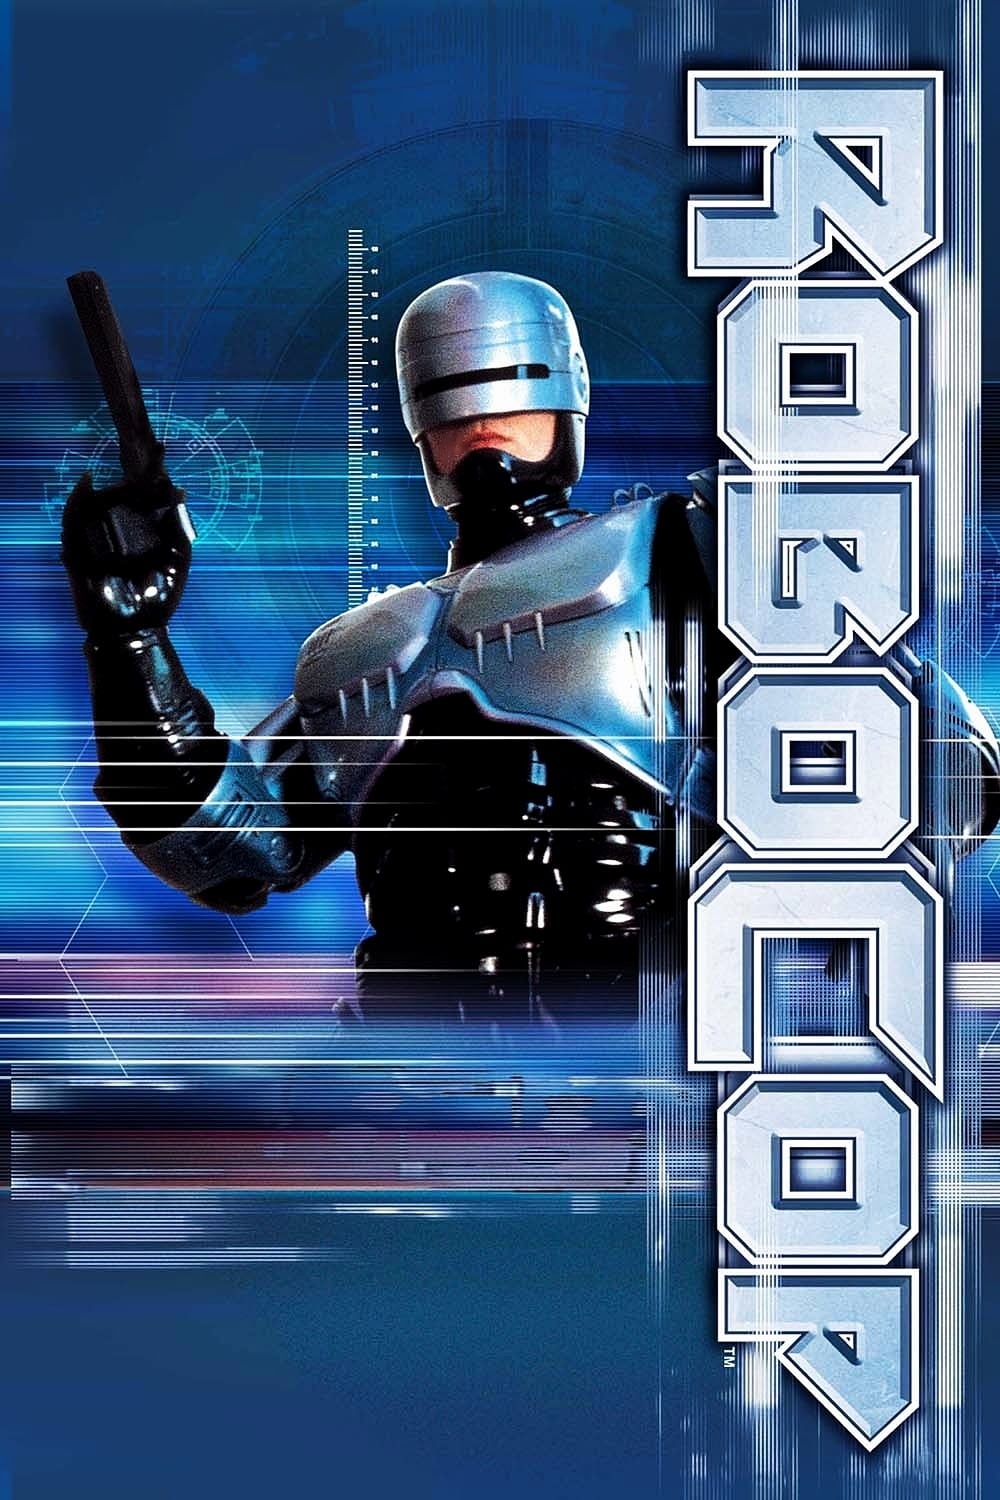 RoboCop 3 - Wikipedia